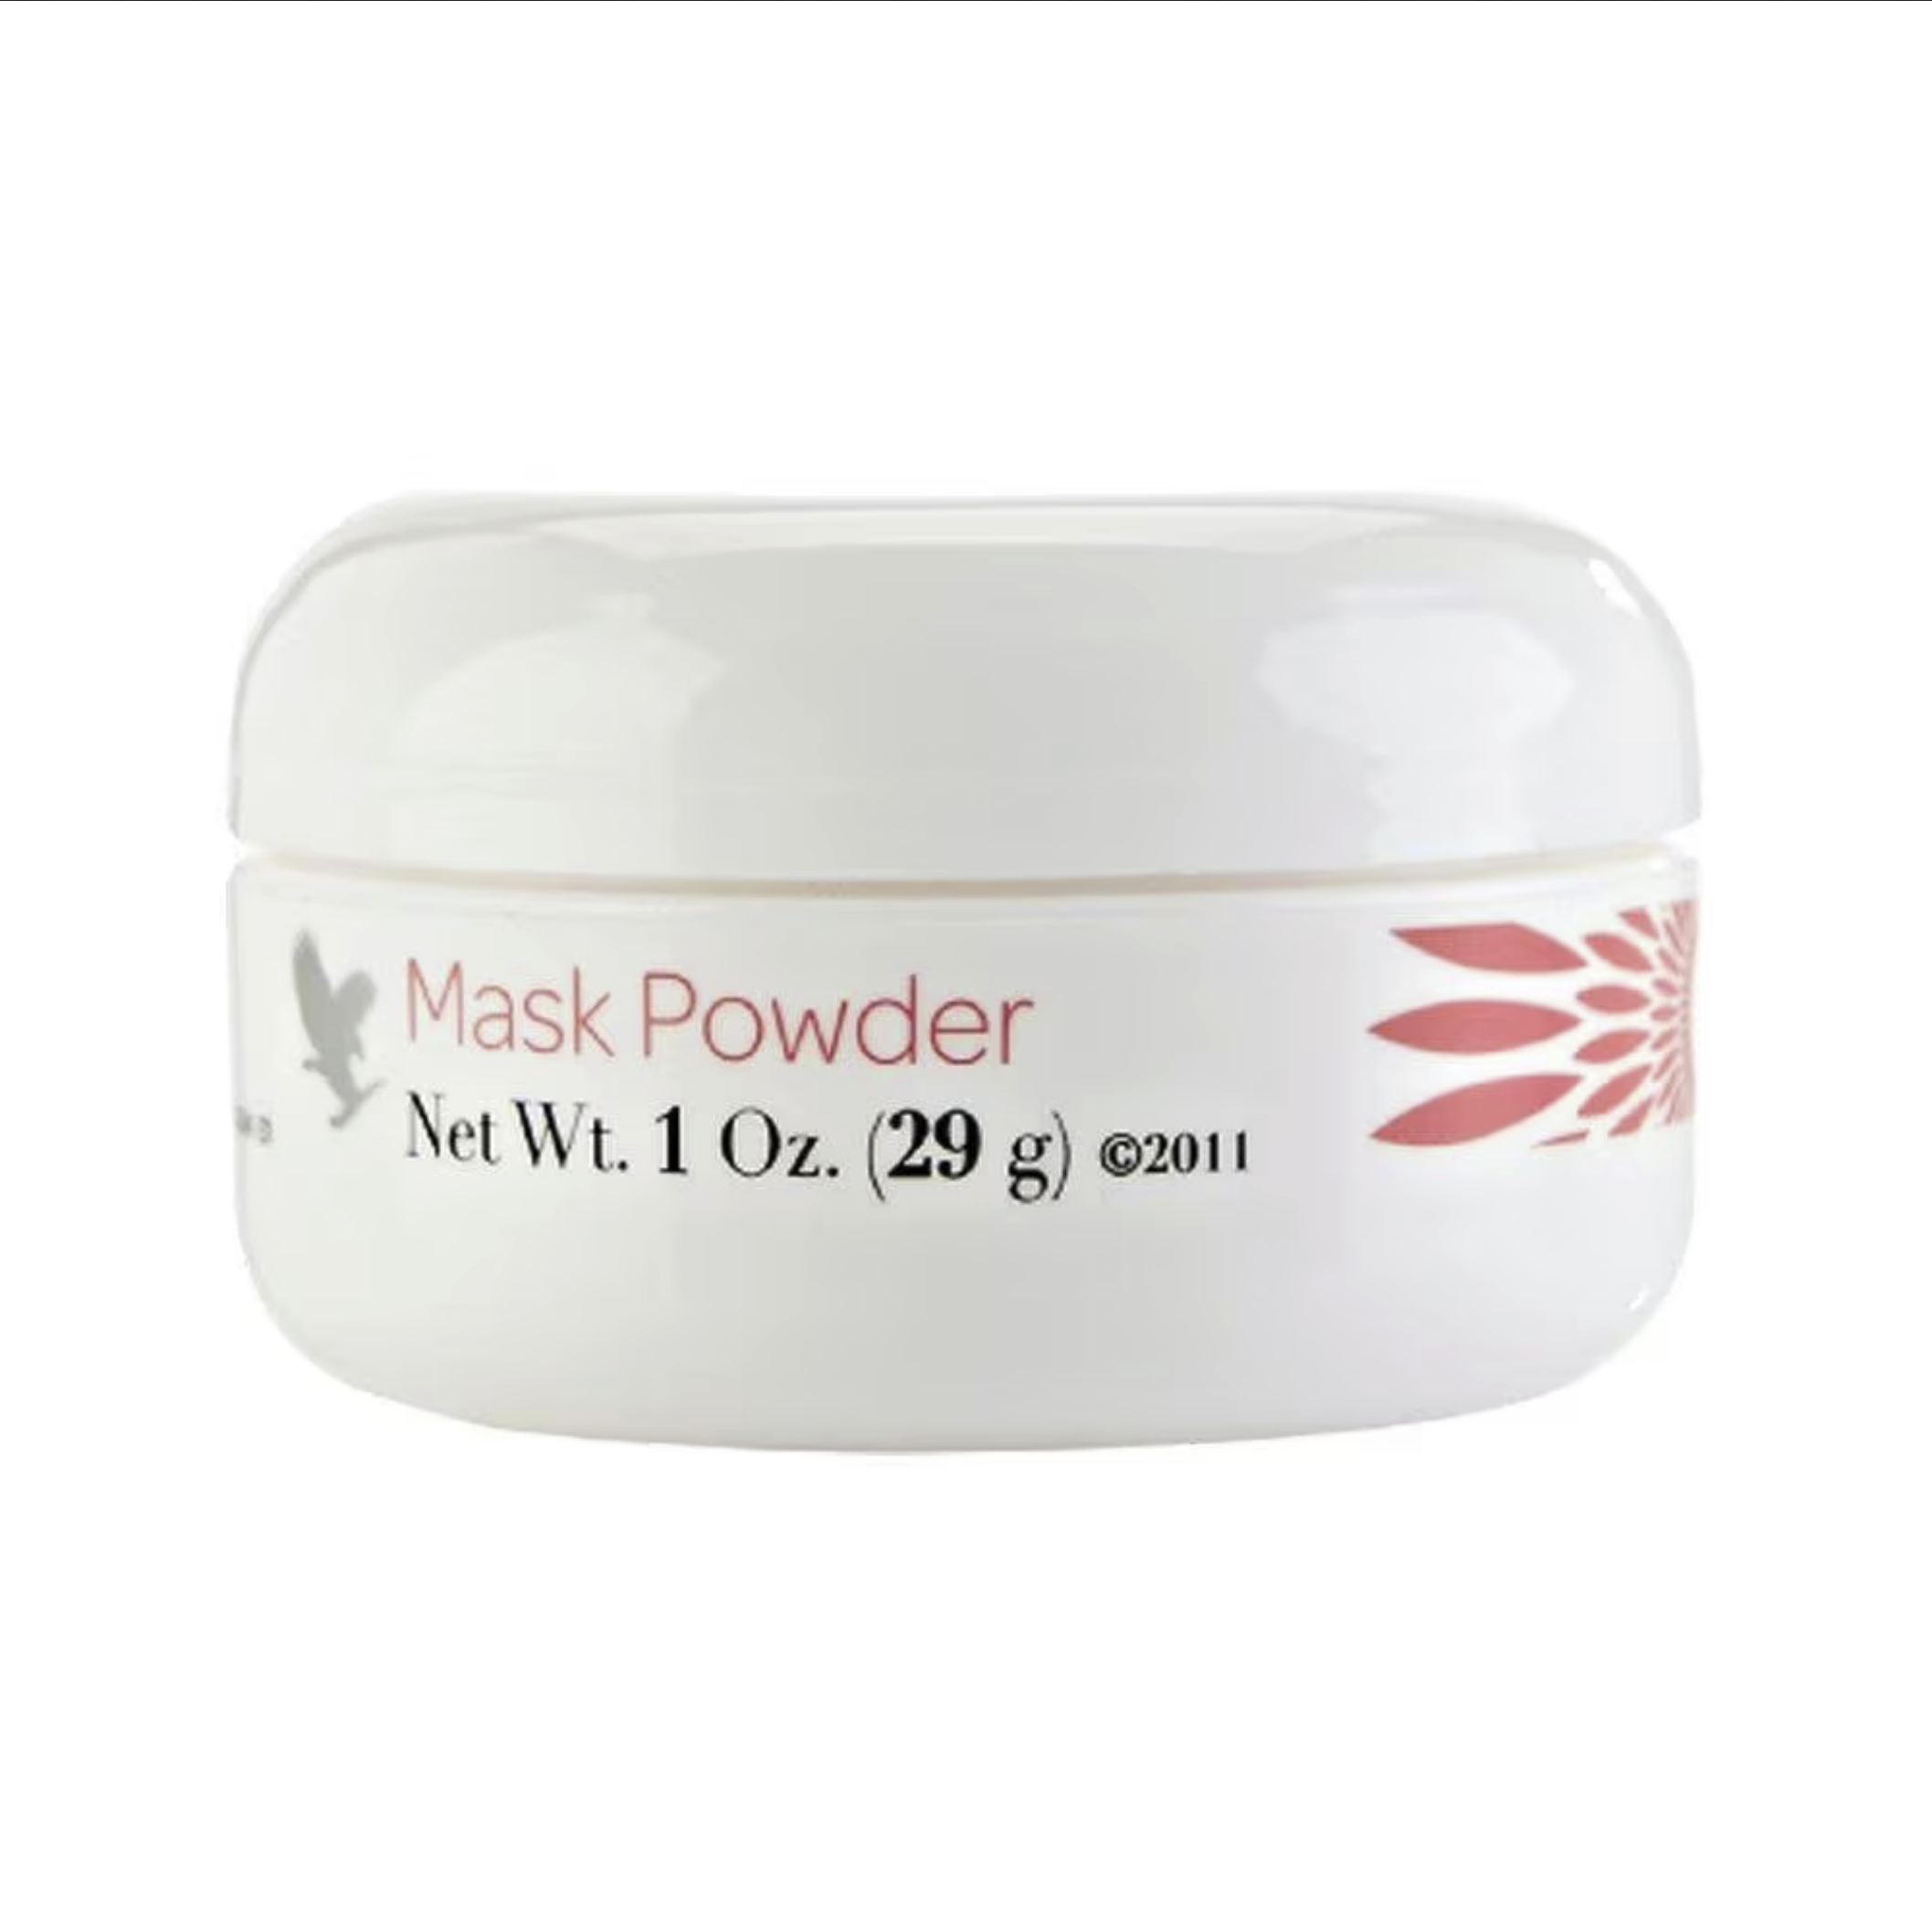 aloe-mask-powder